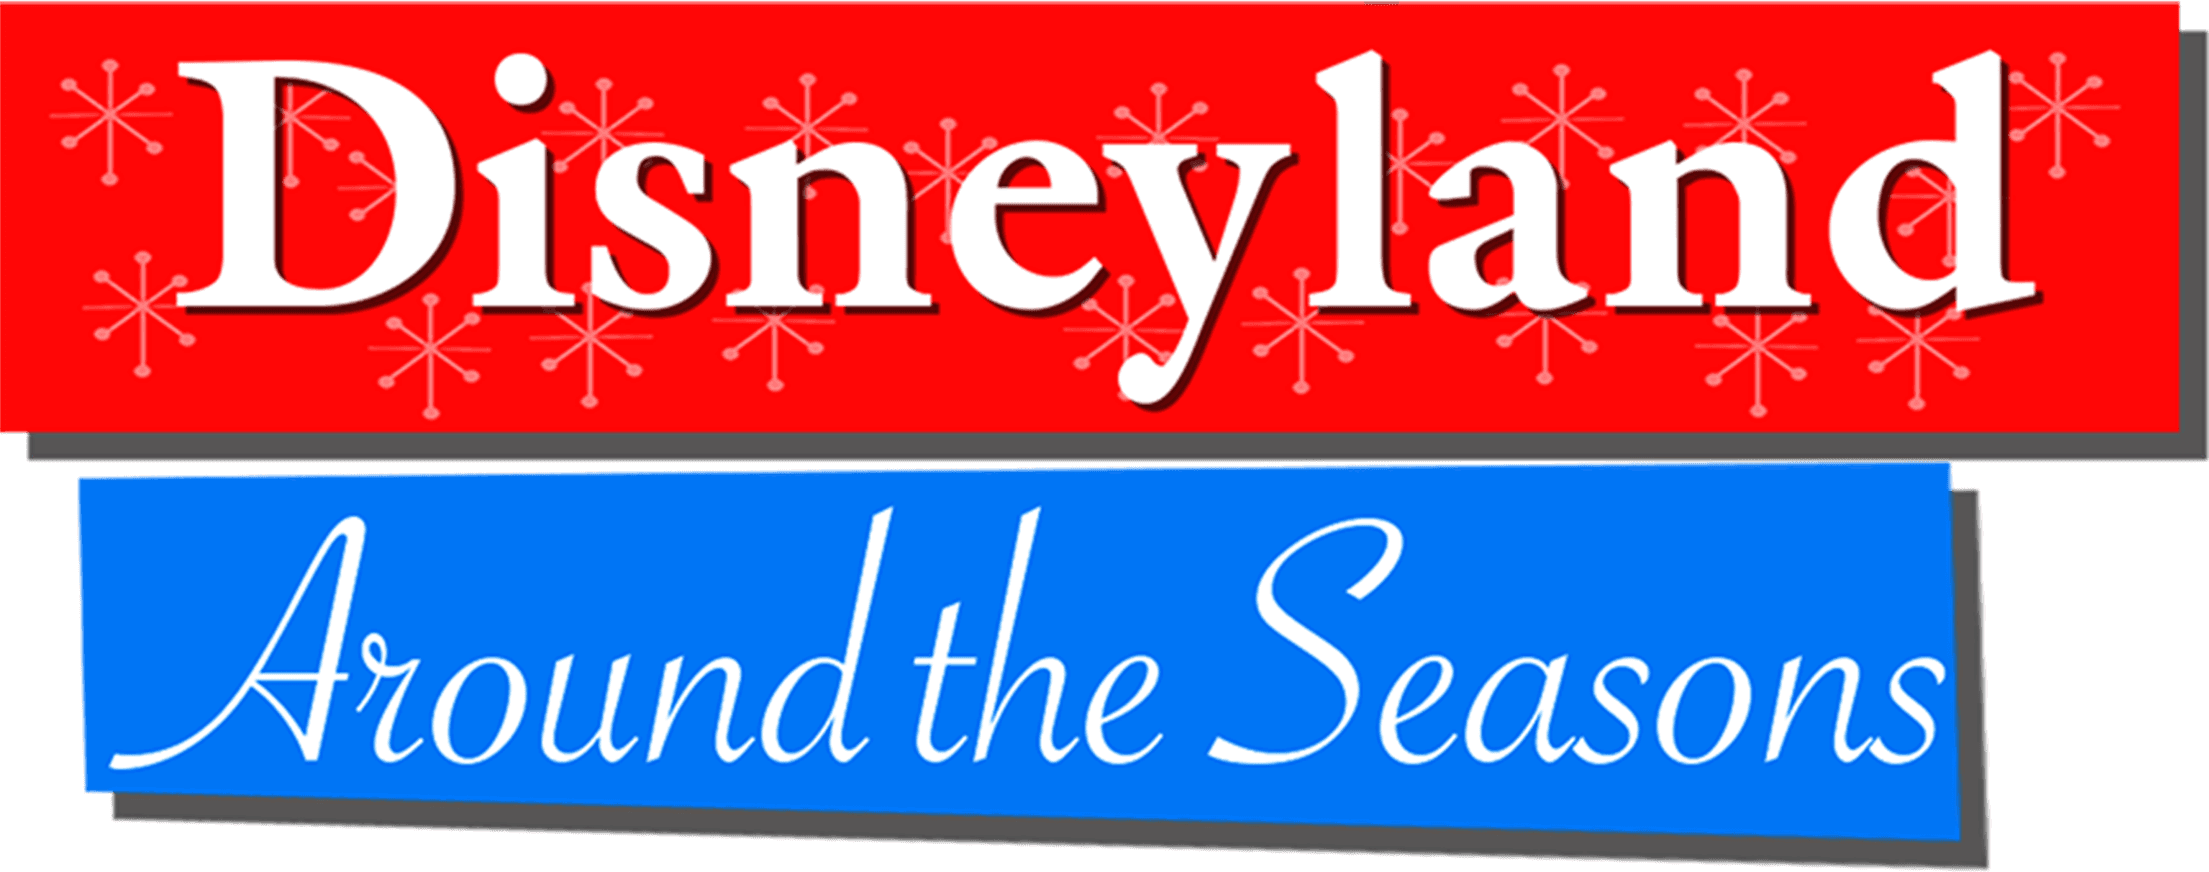 Disneyland Around the Seasons logo